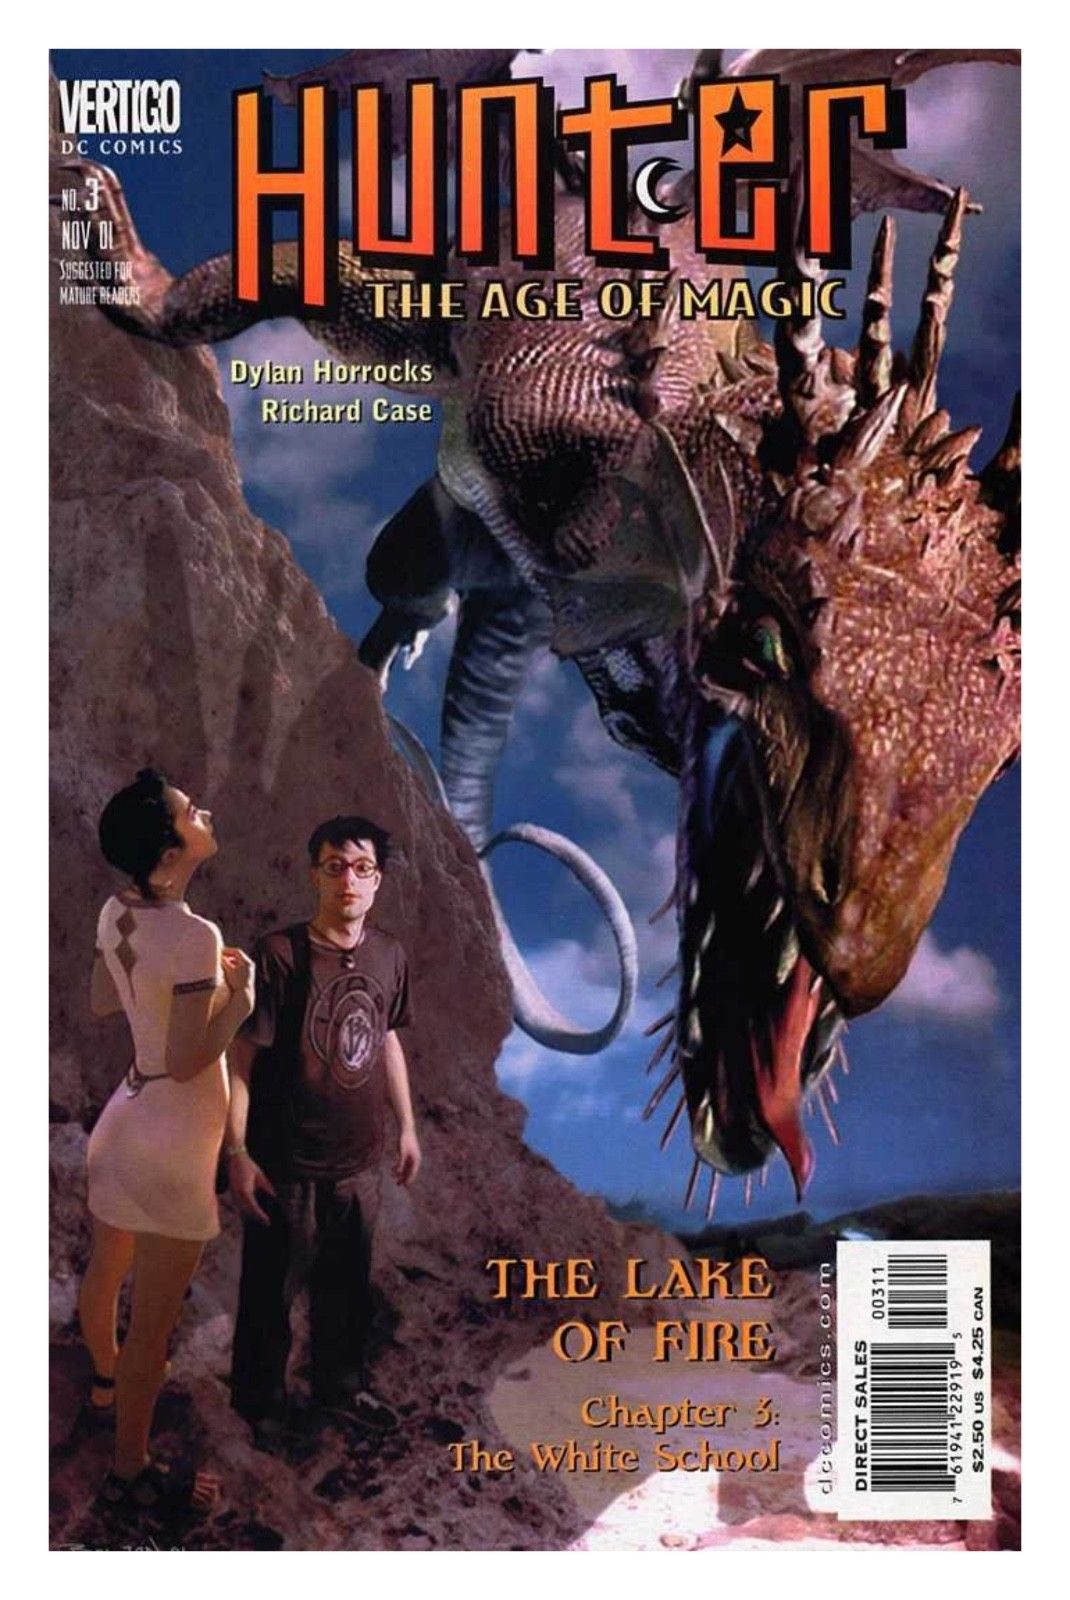 Vertigo DC:  Hunter The Age of Magic No. 3 The Lake of Fire Chapter 3 The White School Nov 01 - Used